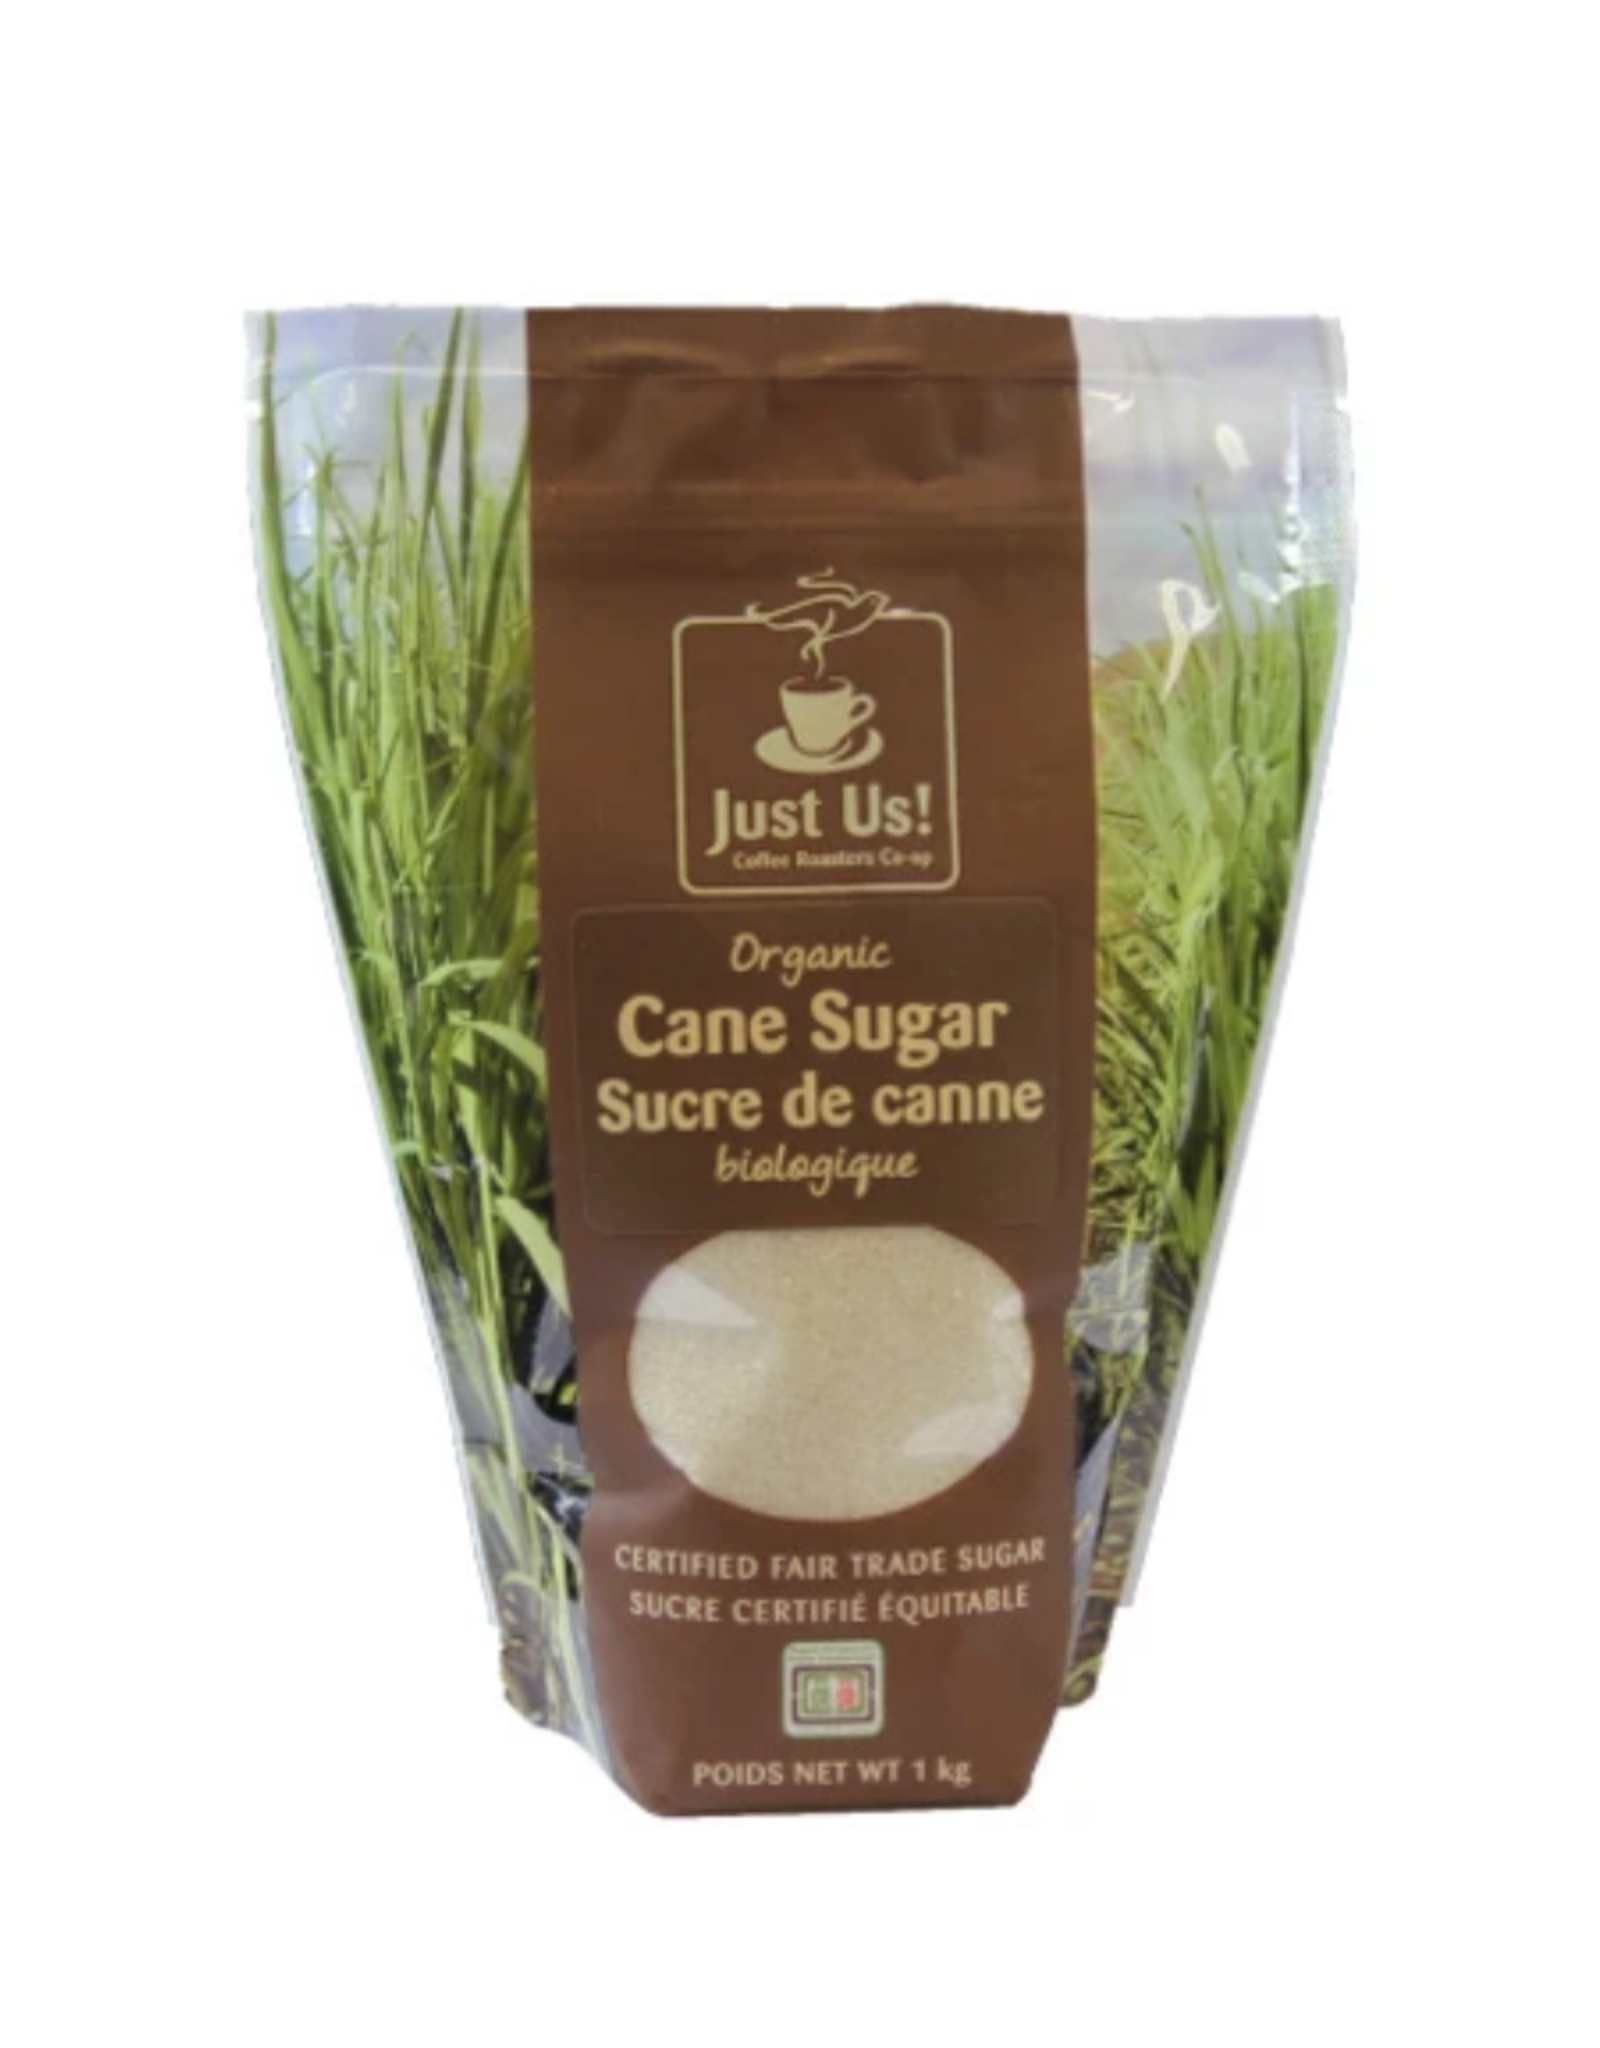 Paraguay Cane Sugar Organic Just Us! 1kg - Paraguay